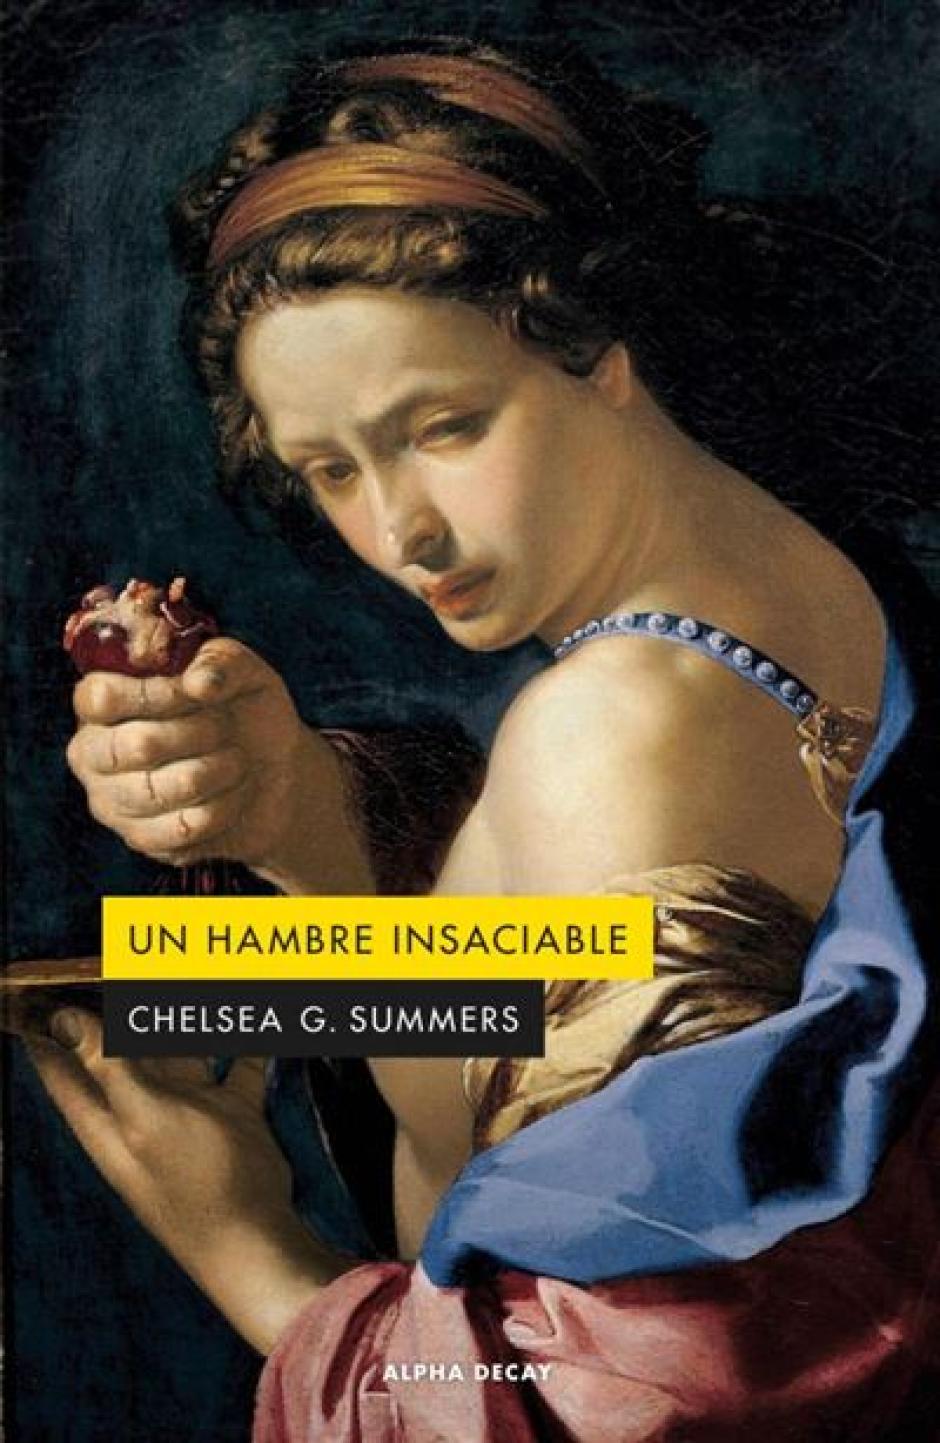 'Un hambre insaciable', de Chelsea G. Summers